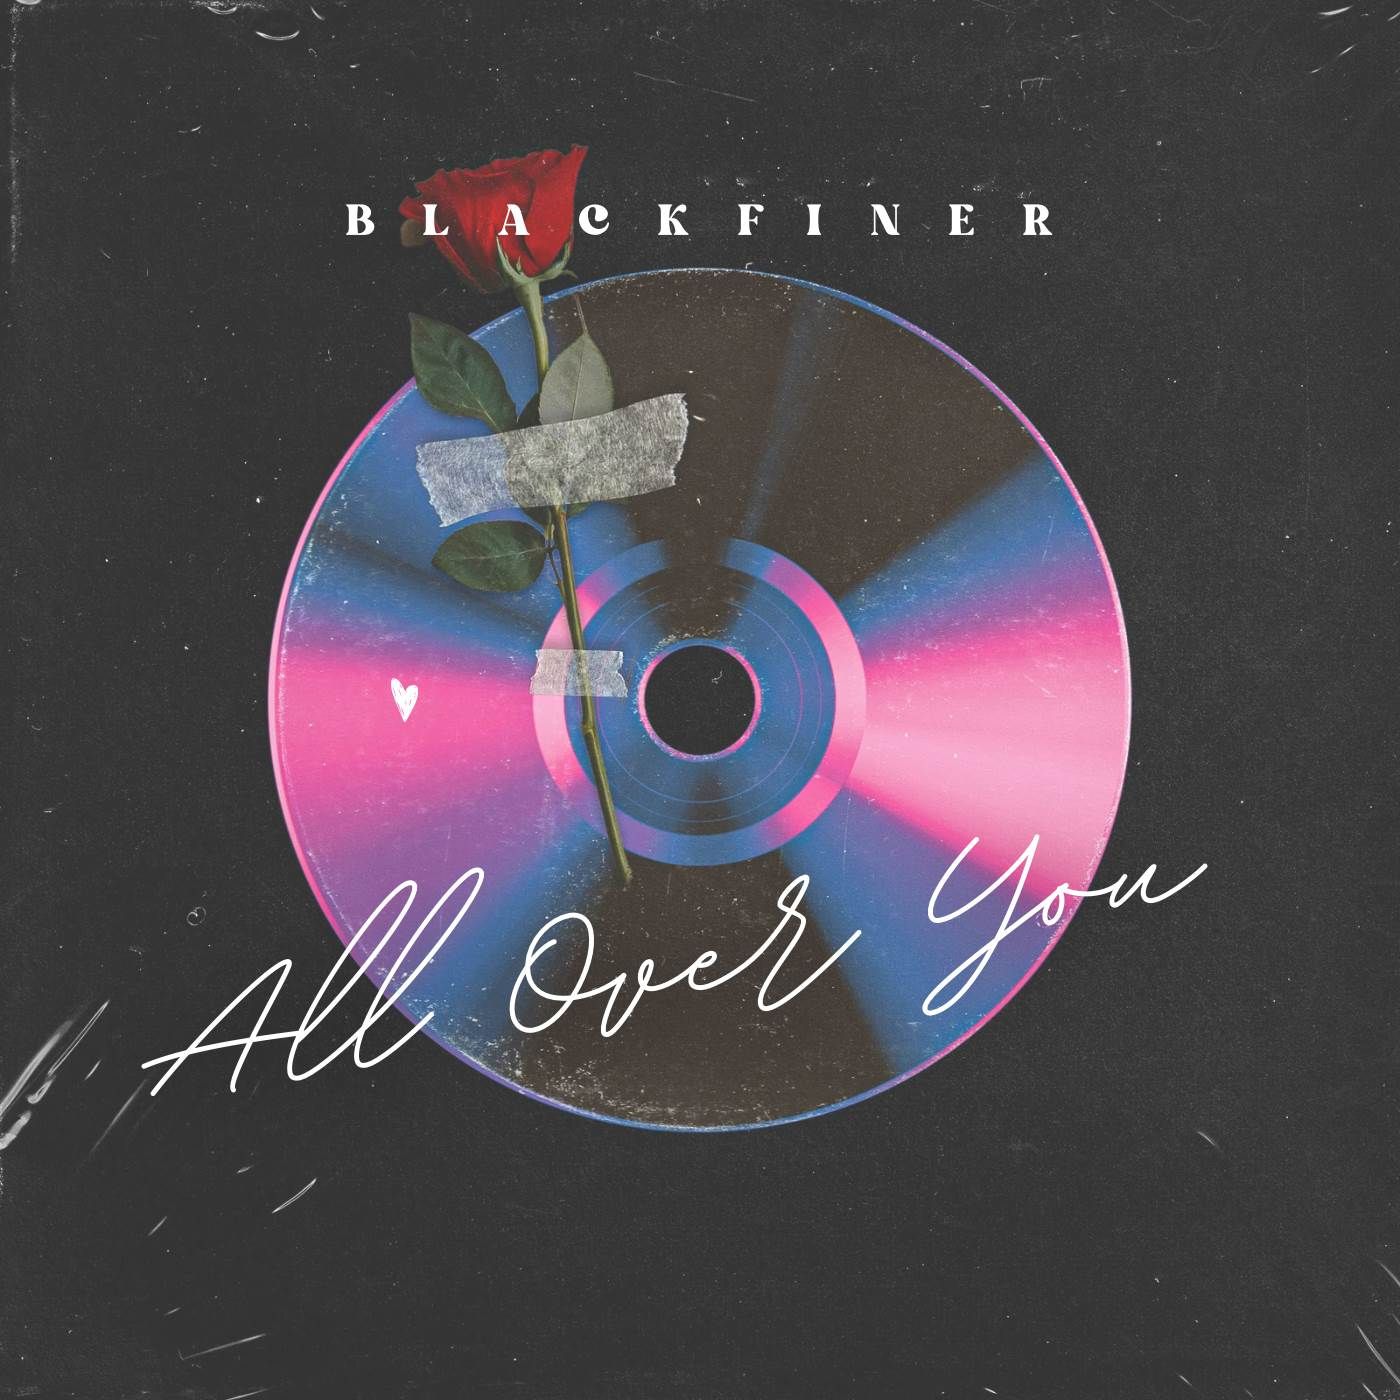 Blackfiner - All Over You